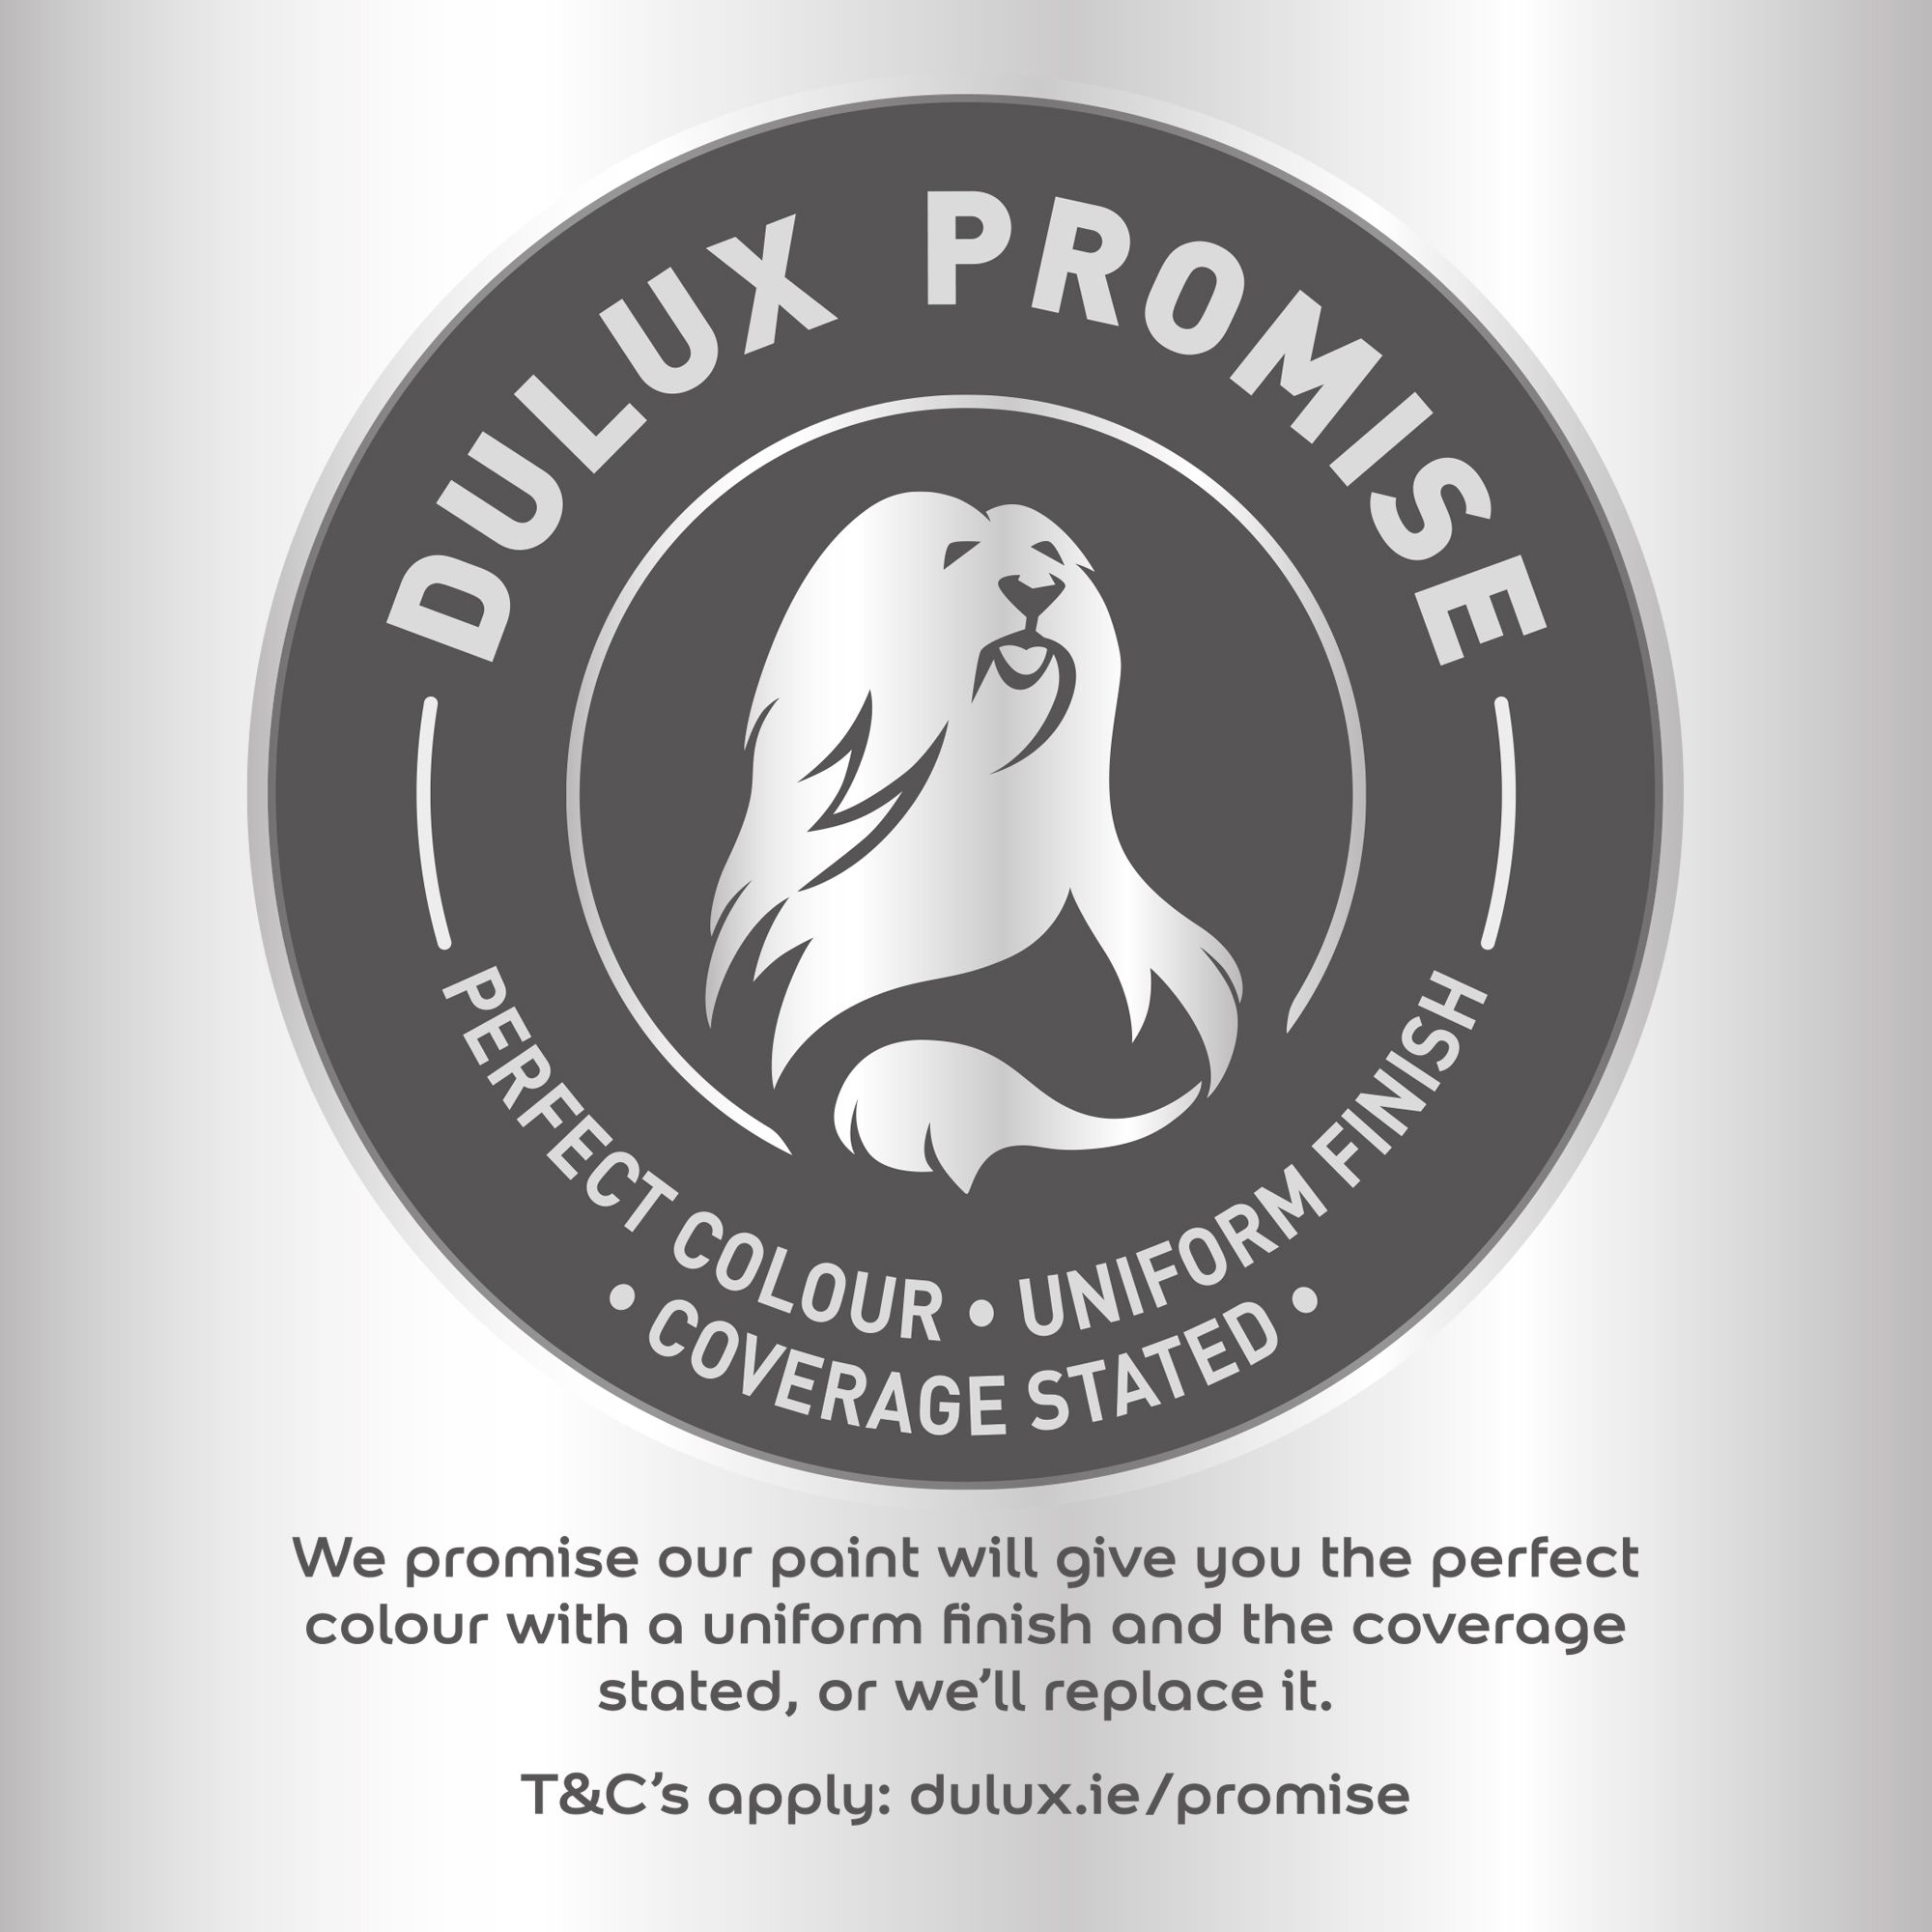 Dulux Easycare Brume Flat matt Emulsion paint, 2.5L